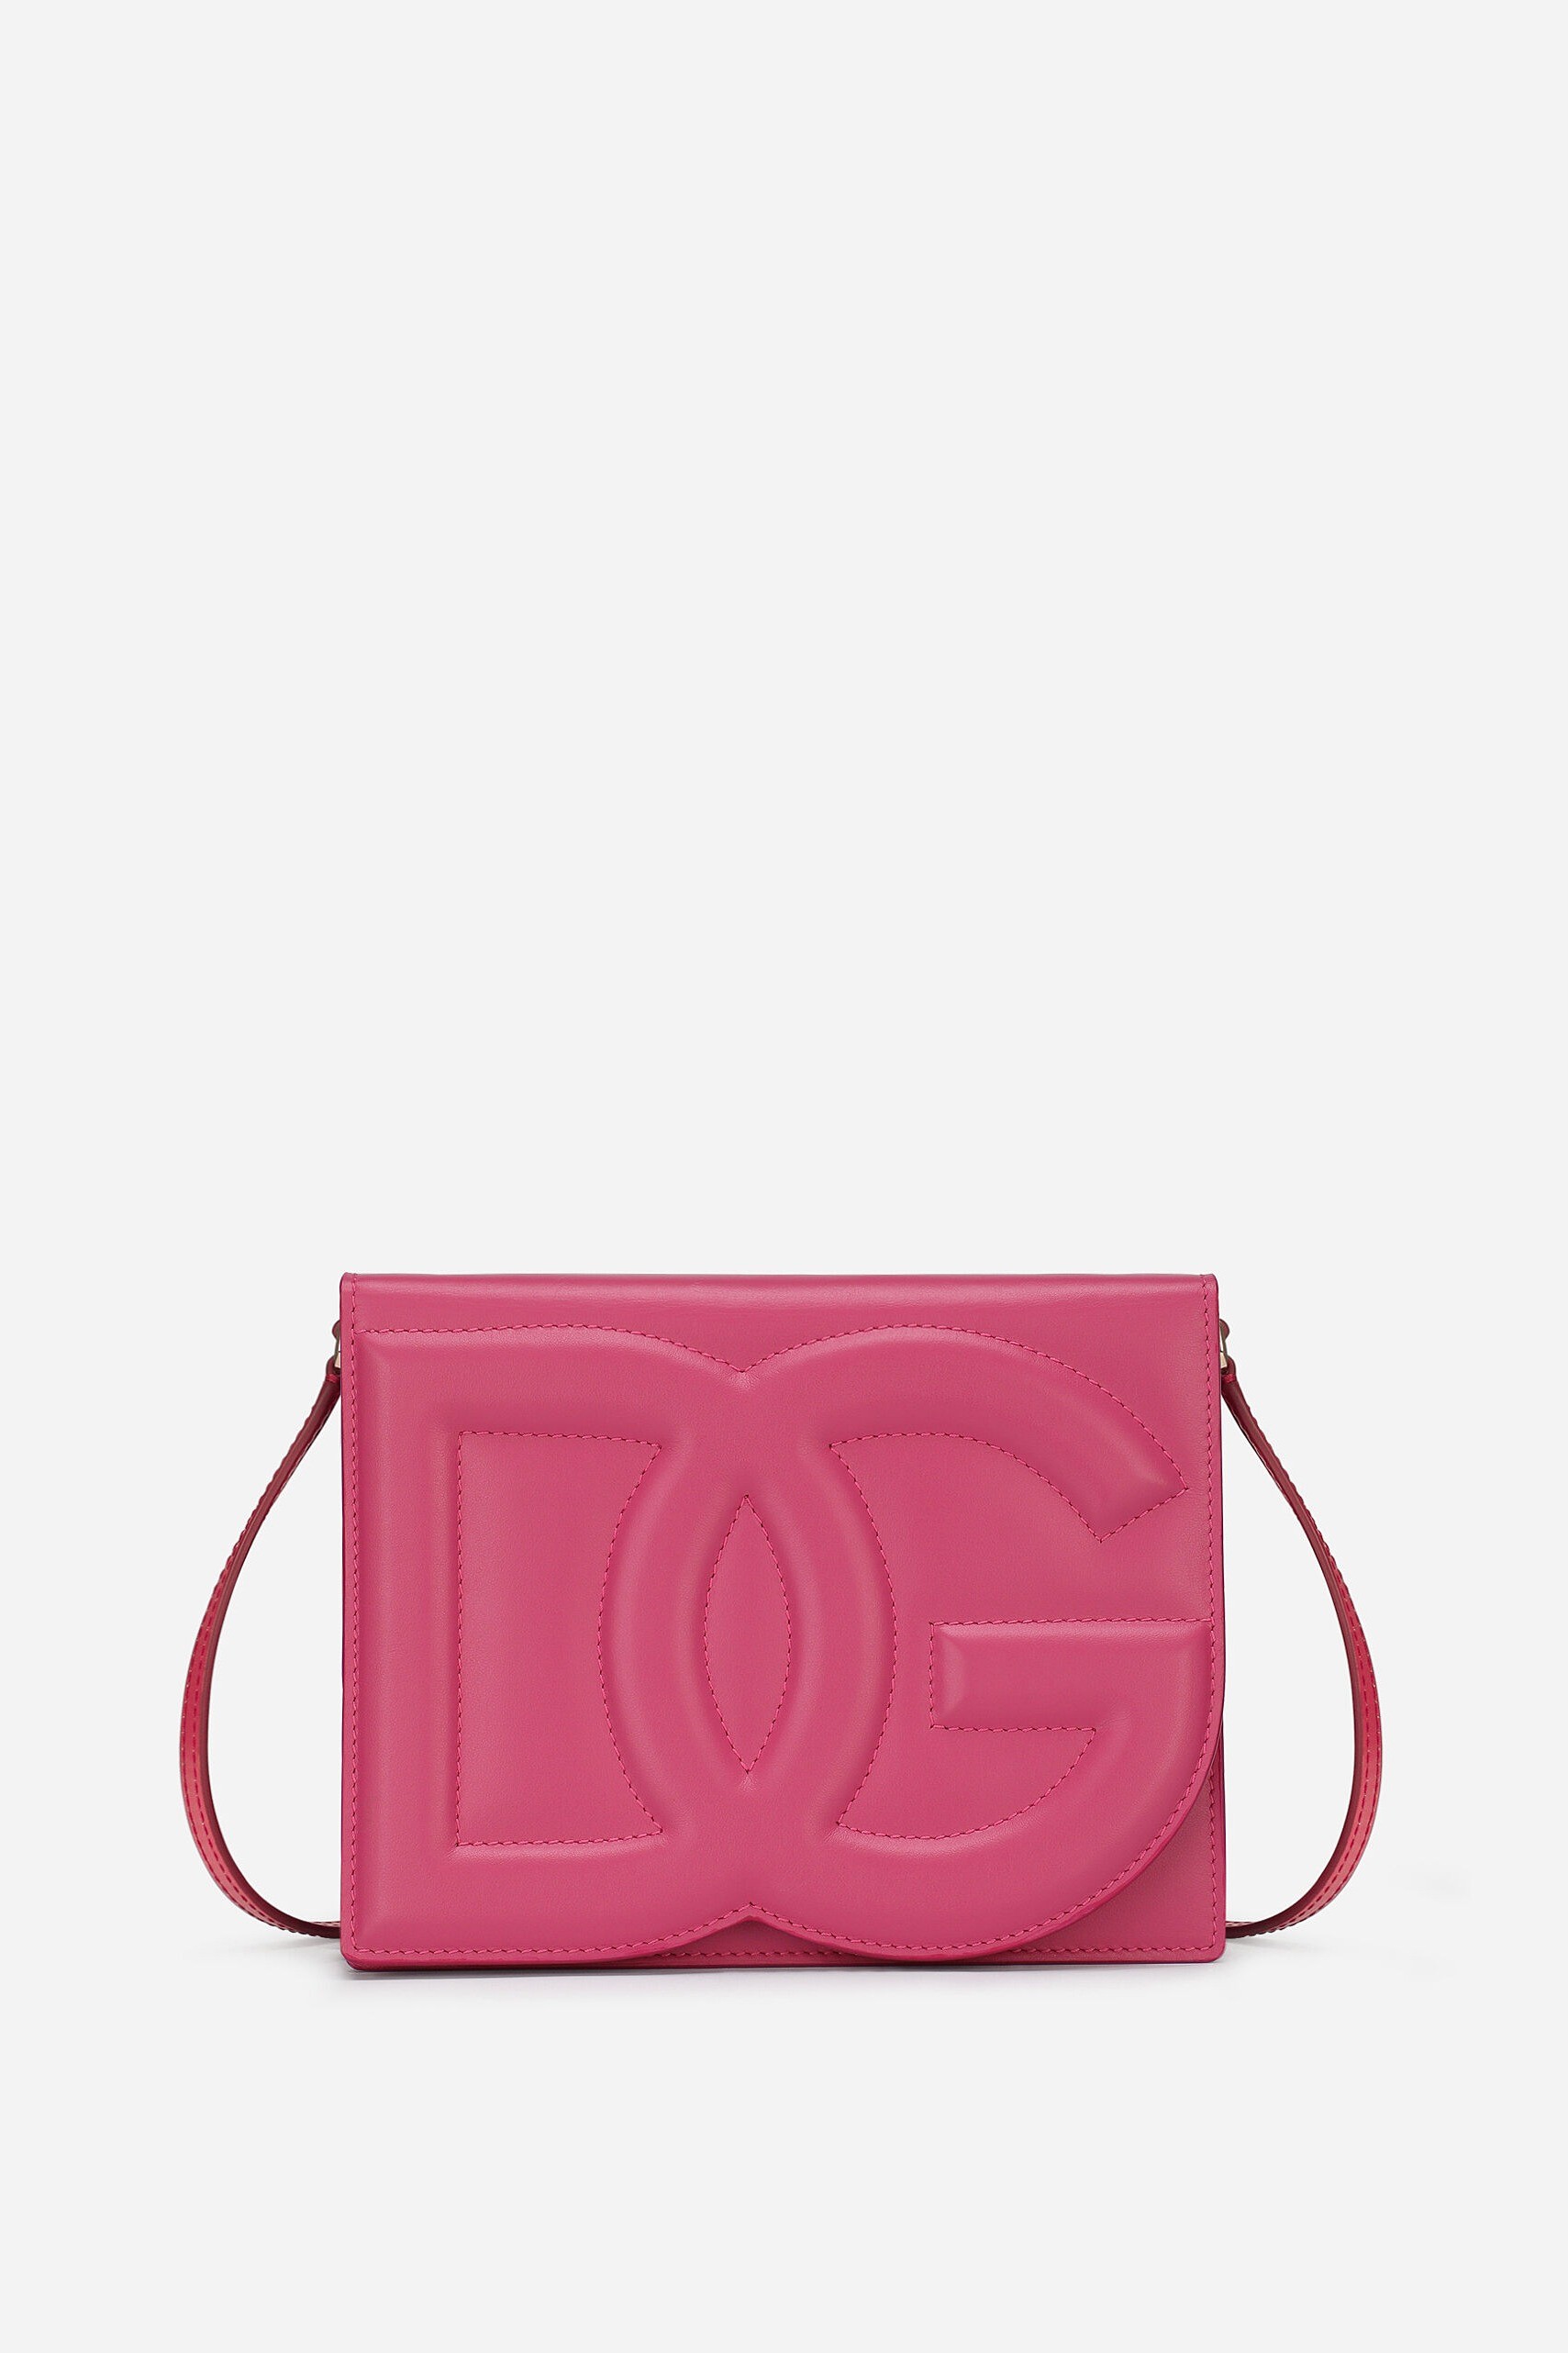 Dolce & Gabbana - CALFSKIN DG LOGO BAG CROSSBODY BAG - Pink